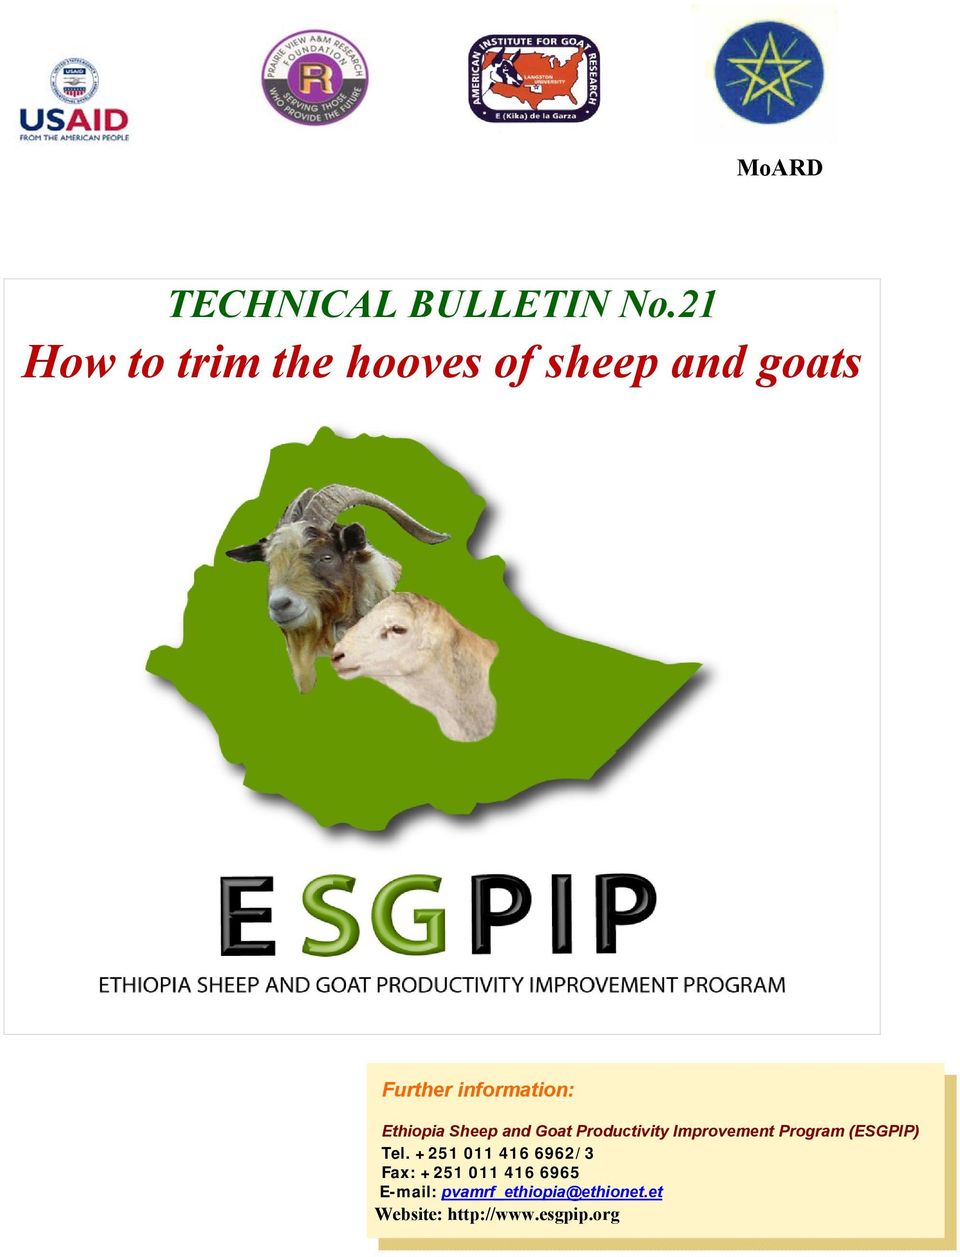 Ethiopia Sheep and Goat Productivity Improvement Program (ESGPIP)